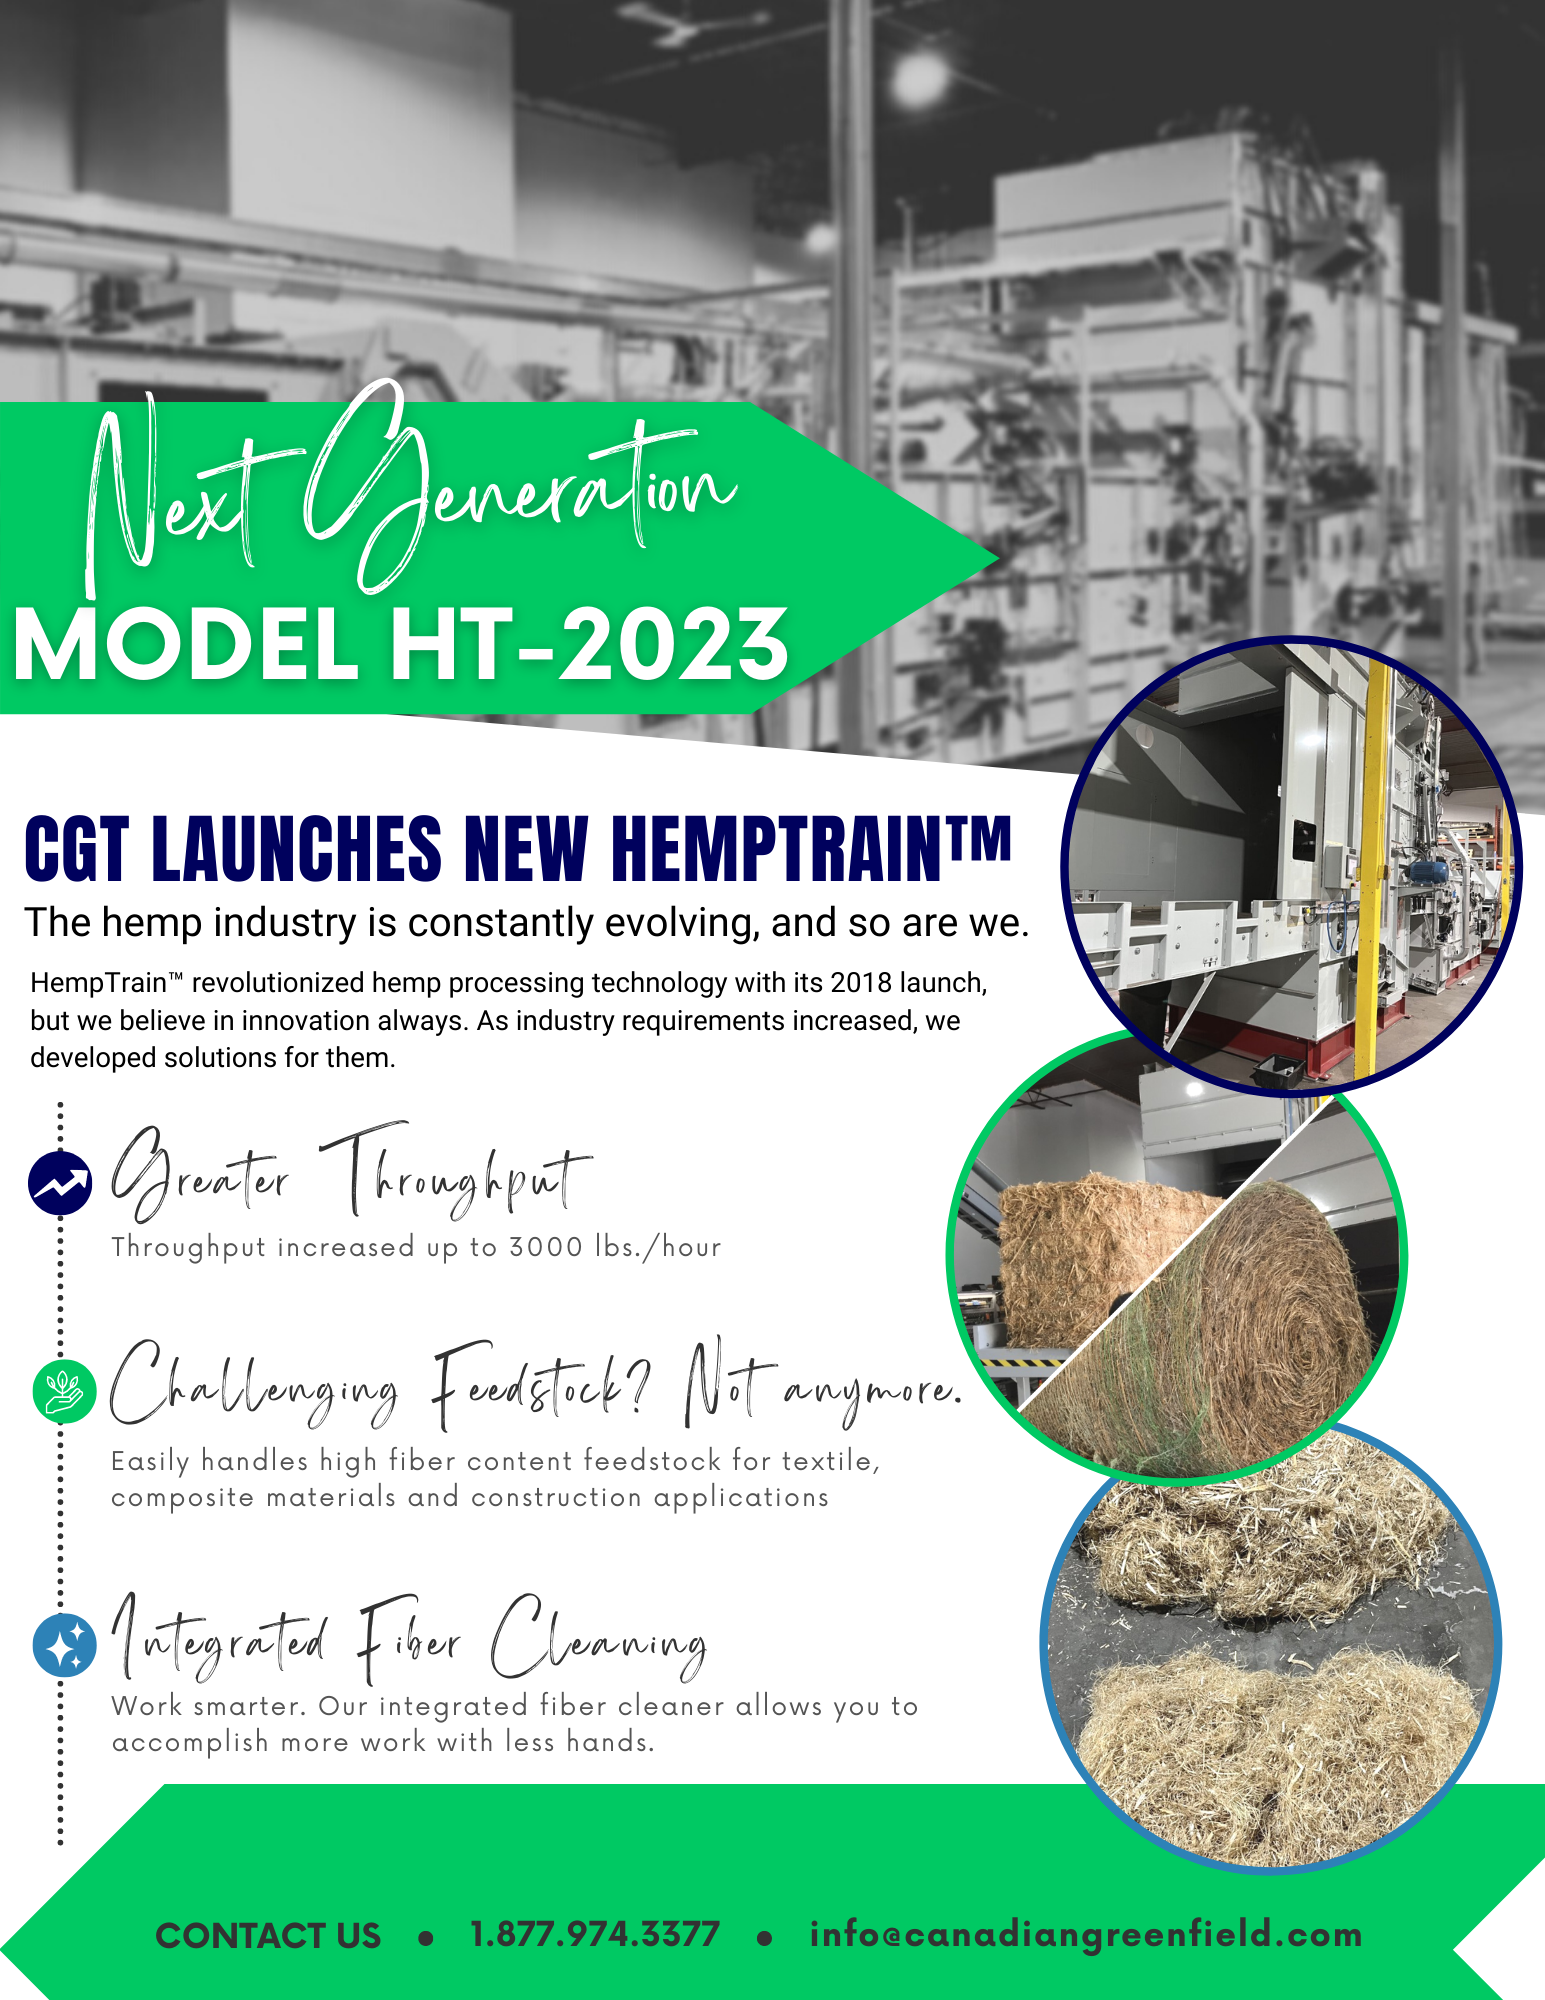 Next generation model ht-2023